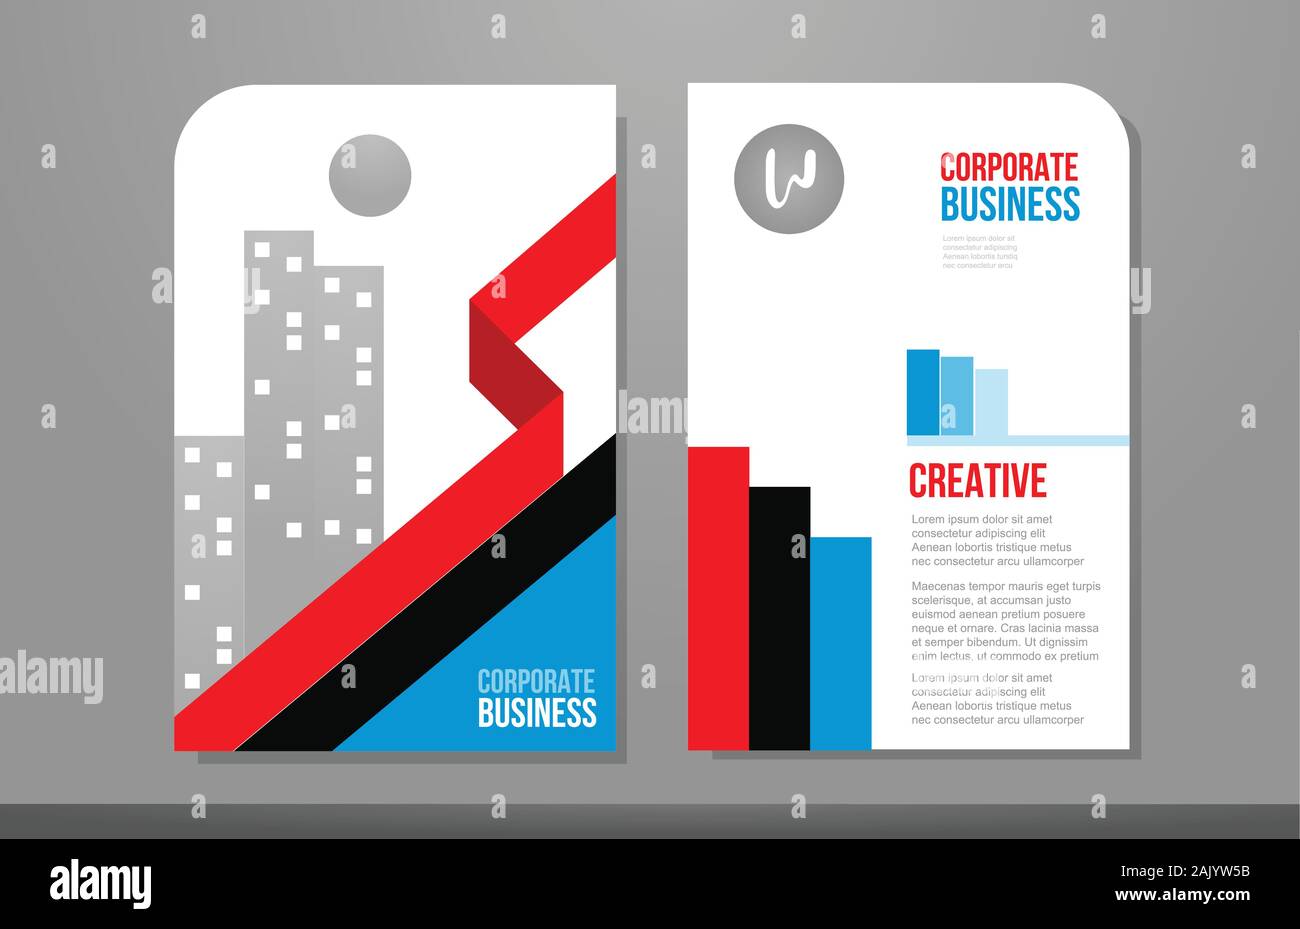 Custom Marketing Materials & Business Products - Vistaprint